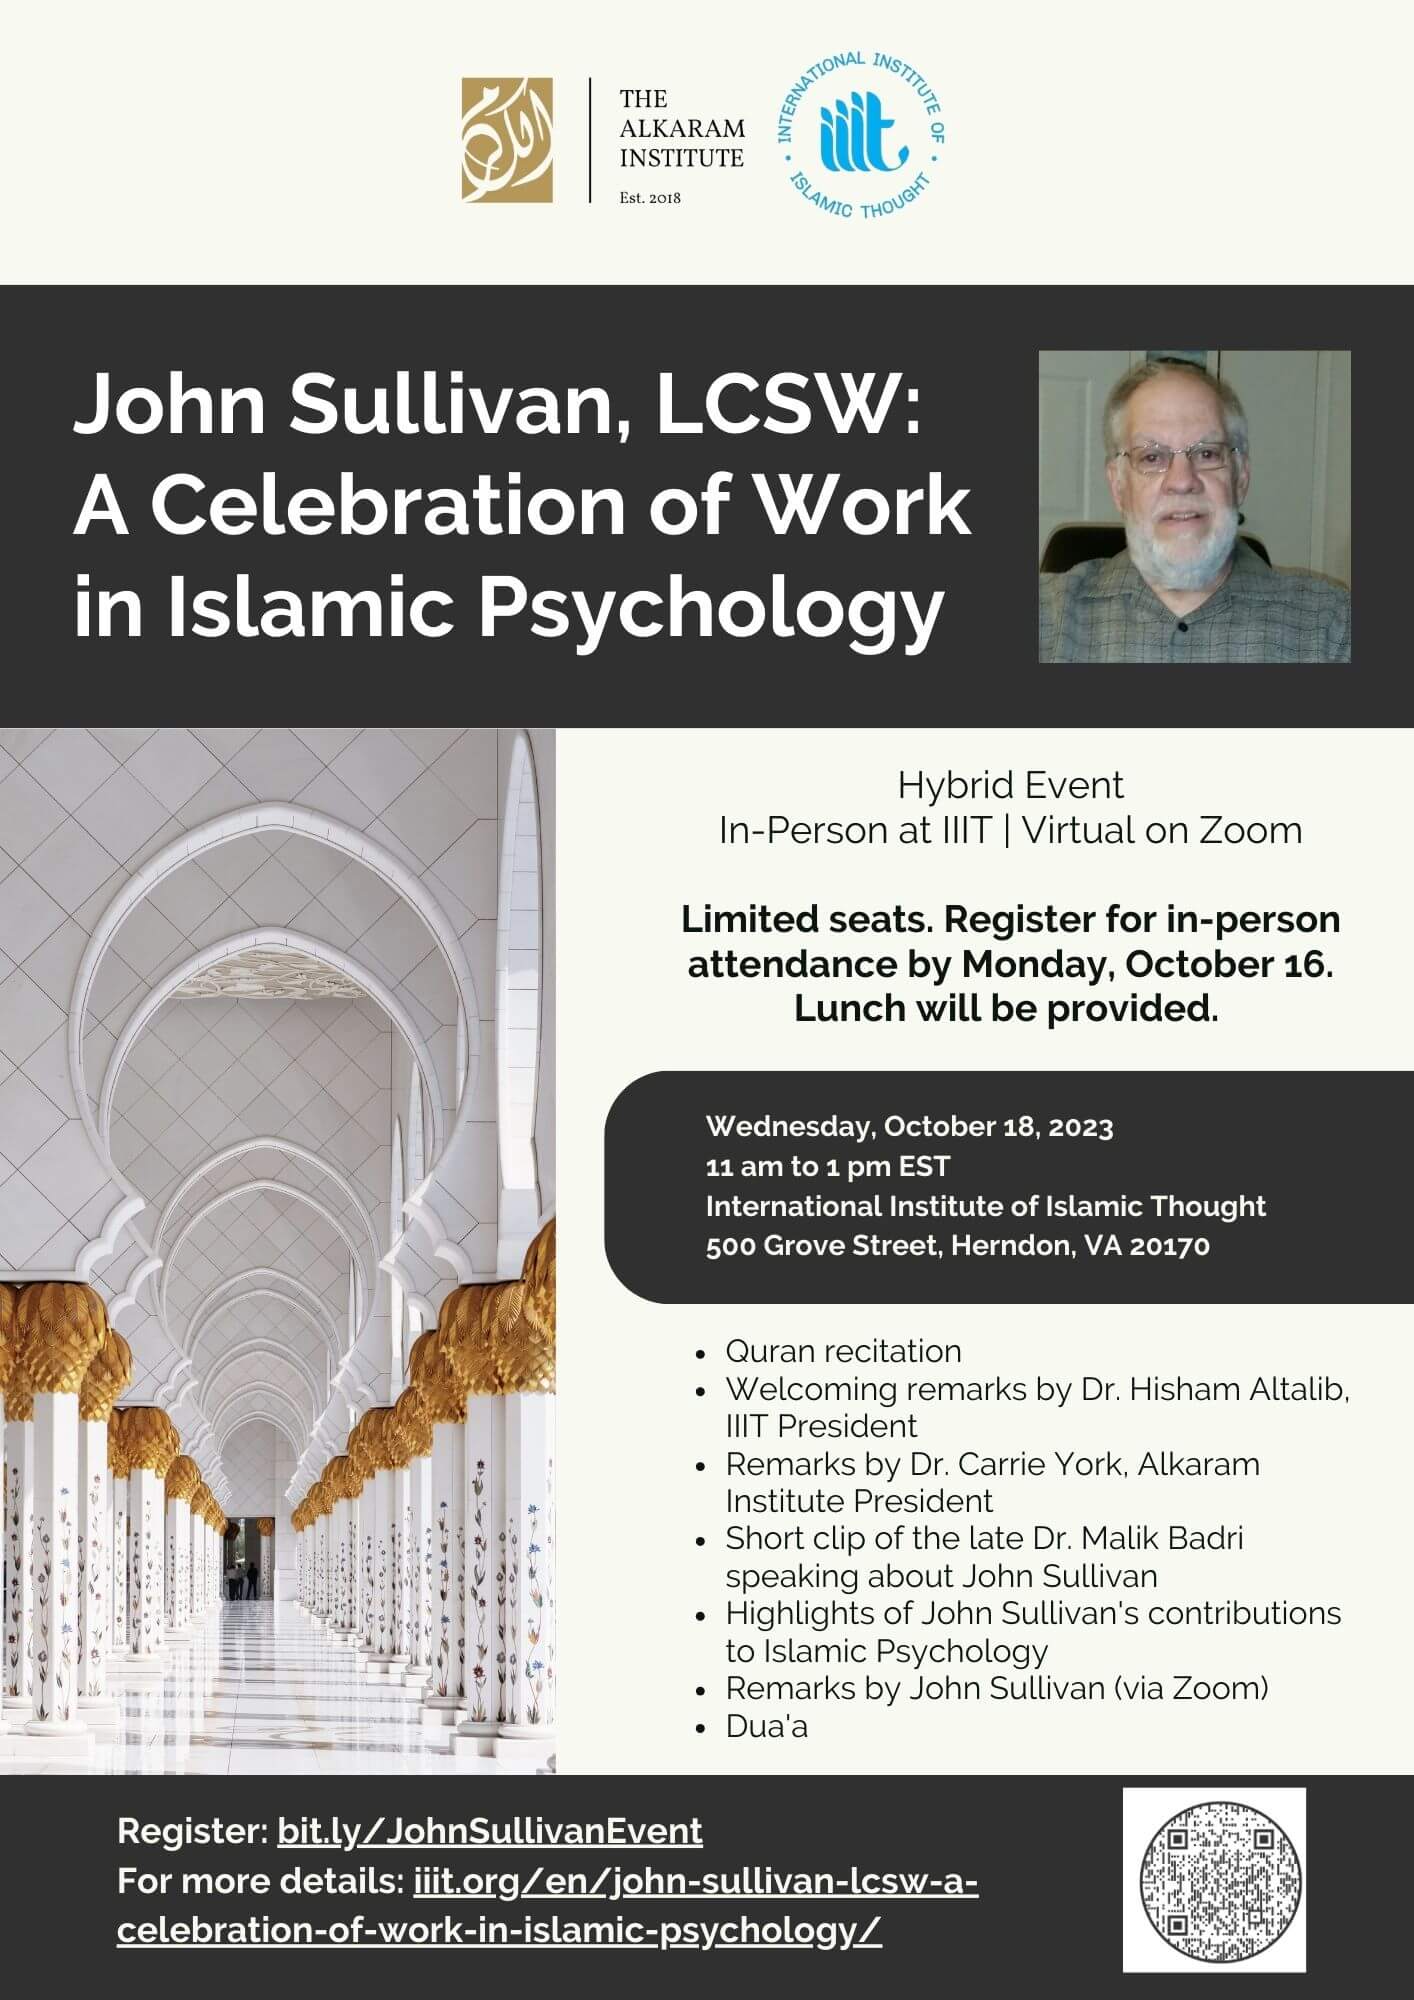 John Sullivan, LCSW: A Celebration of Work in Islamic Psychology